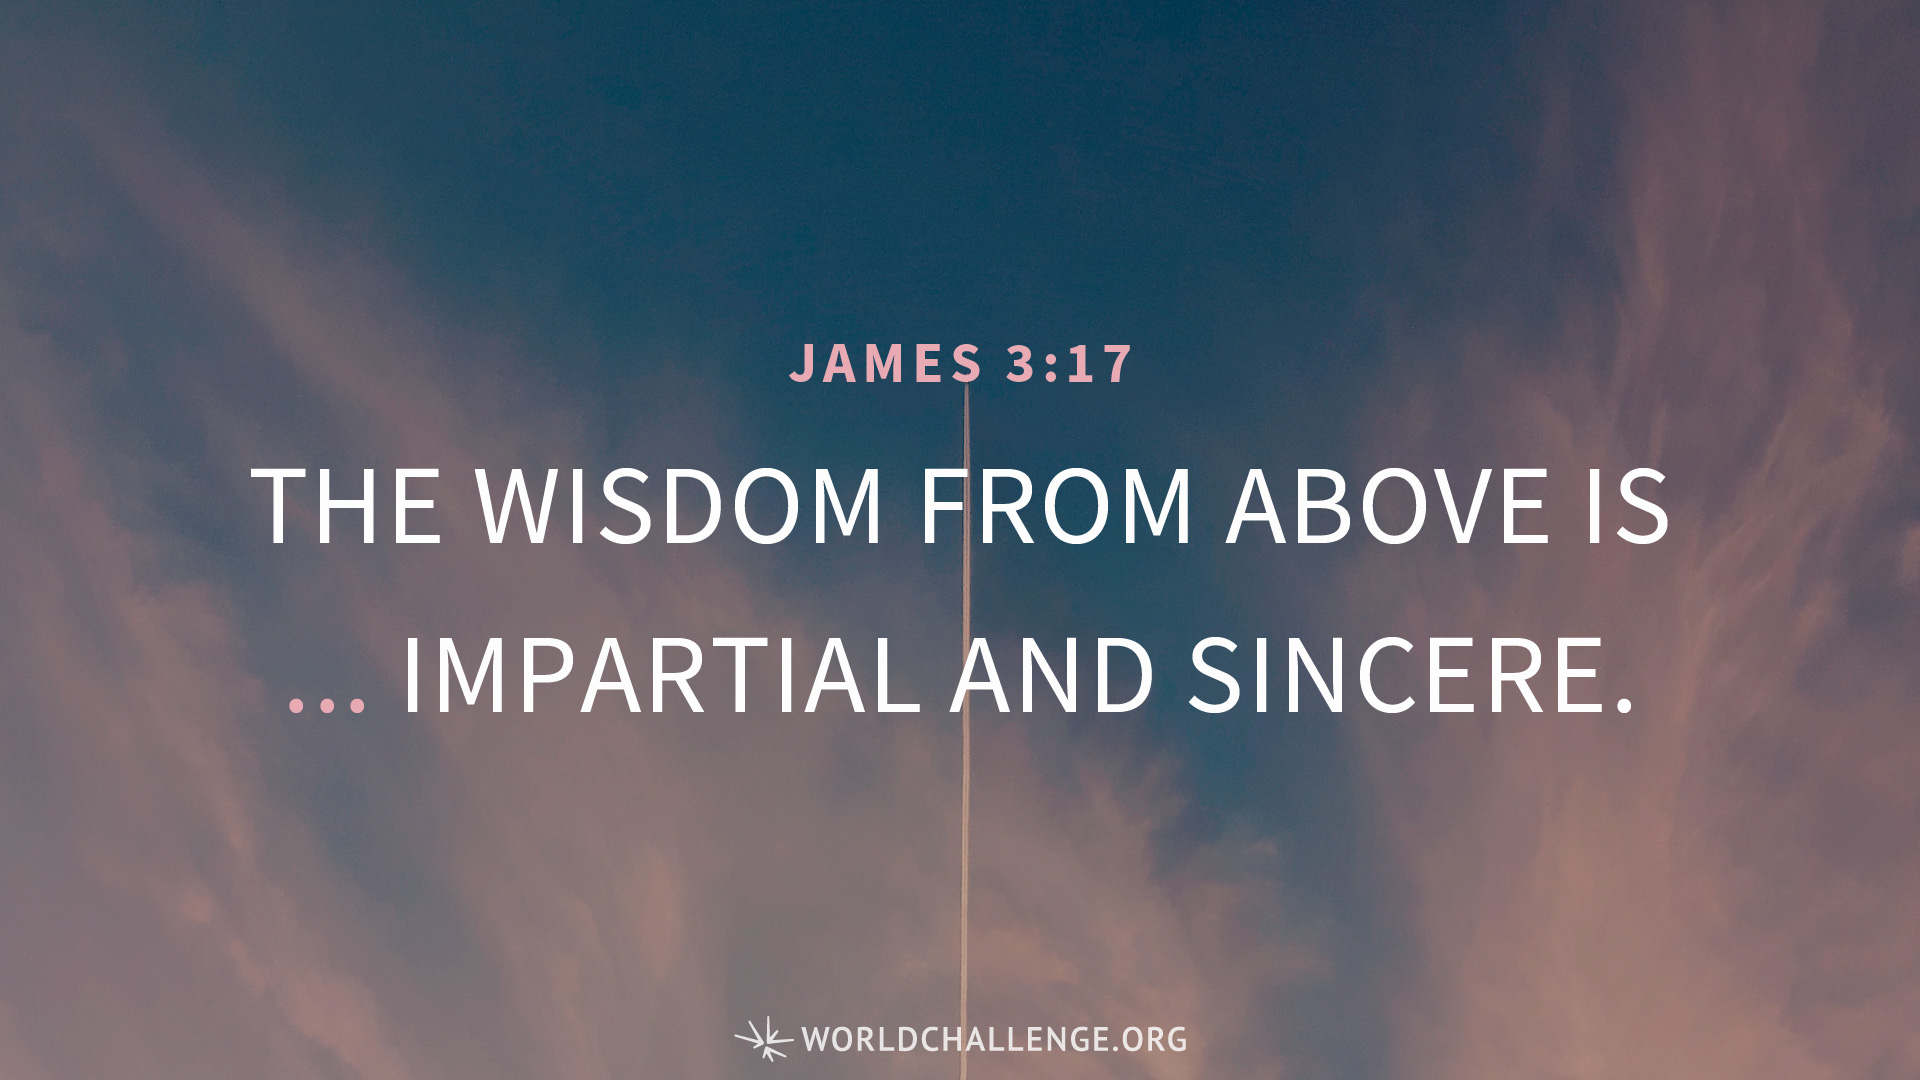 James 3:17 